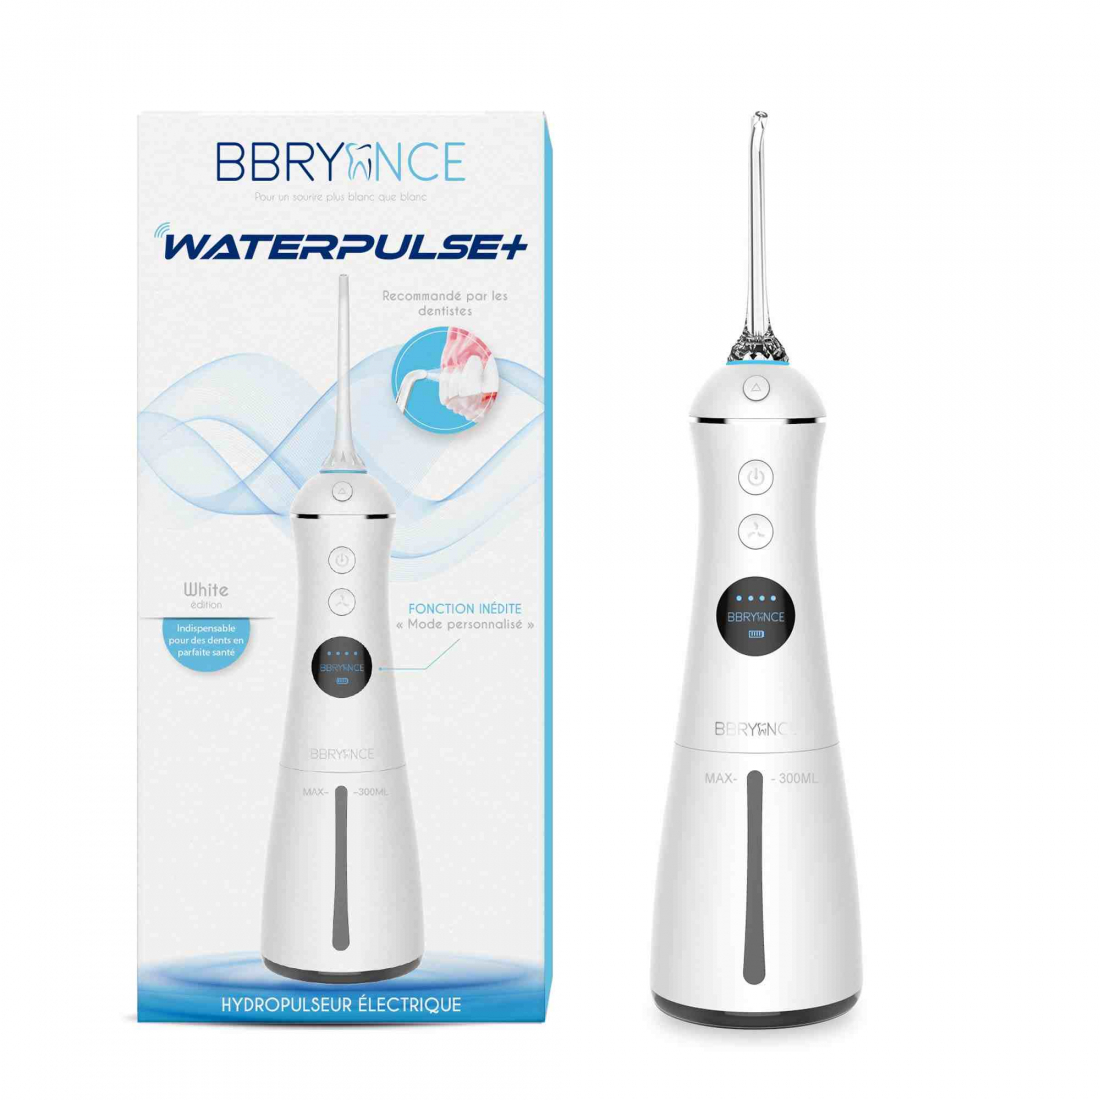 'Jet Waterpulse+' Electric Toothbrush - White Edition